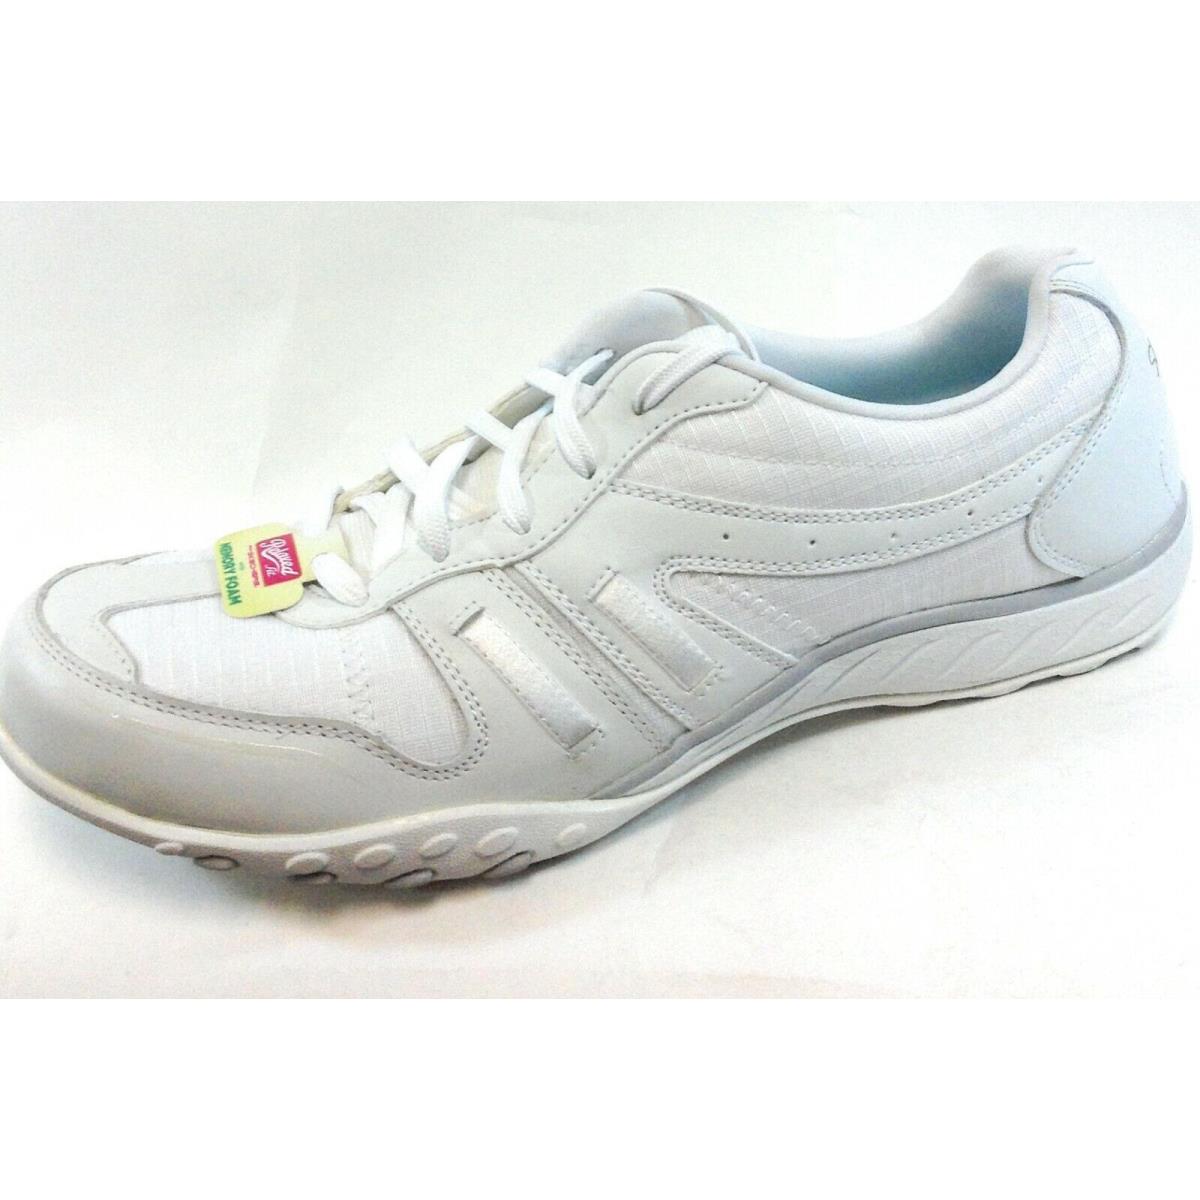 Womens Skechers 22532 Wht Breathe Easy Jackpot White Memory Foam Sneakers | 046762088542 - Skechers shoes Breathe Easy - White , White | SporTipTop